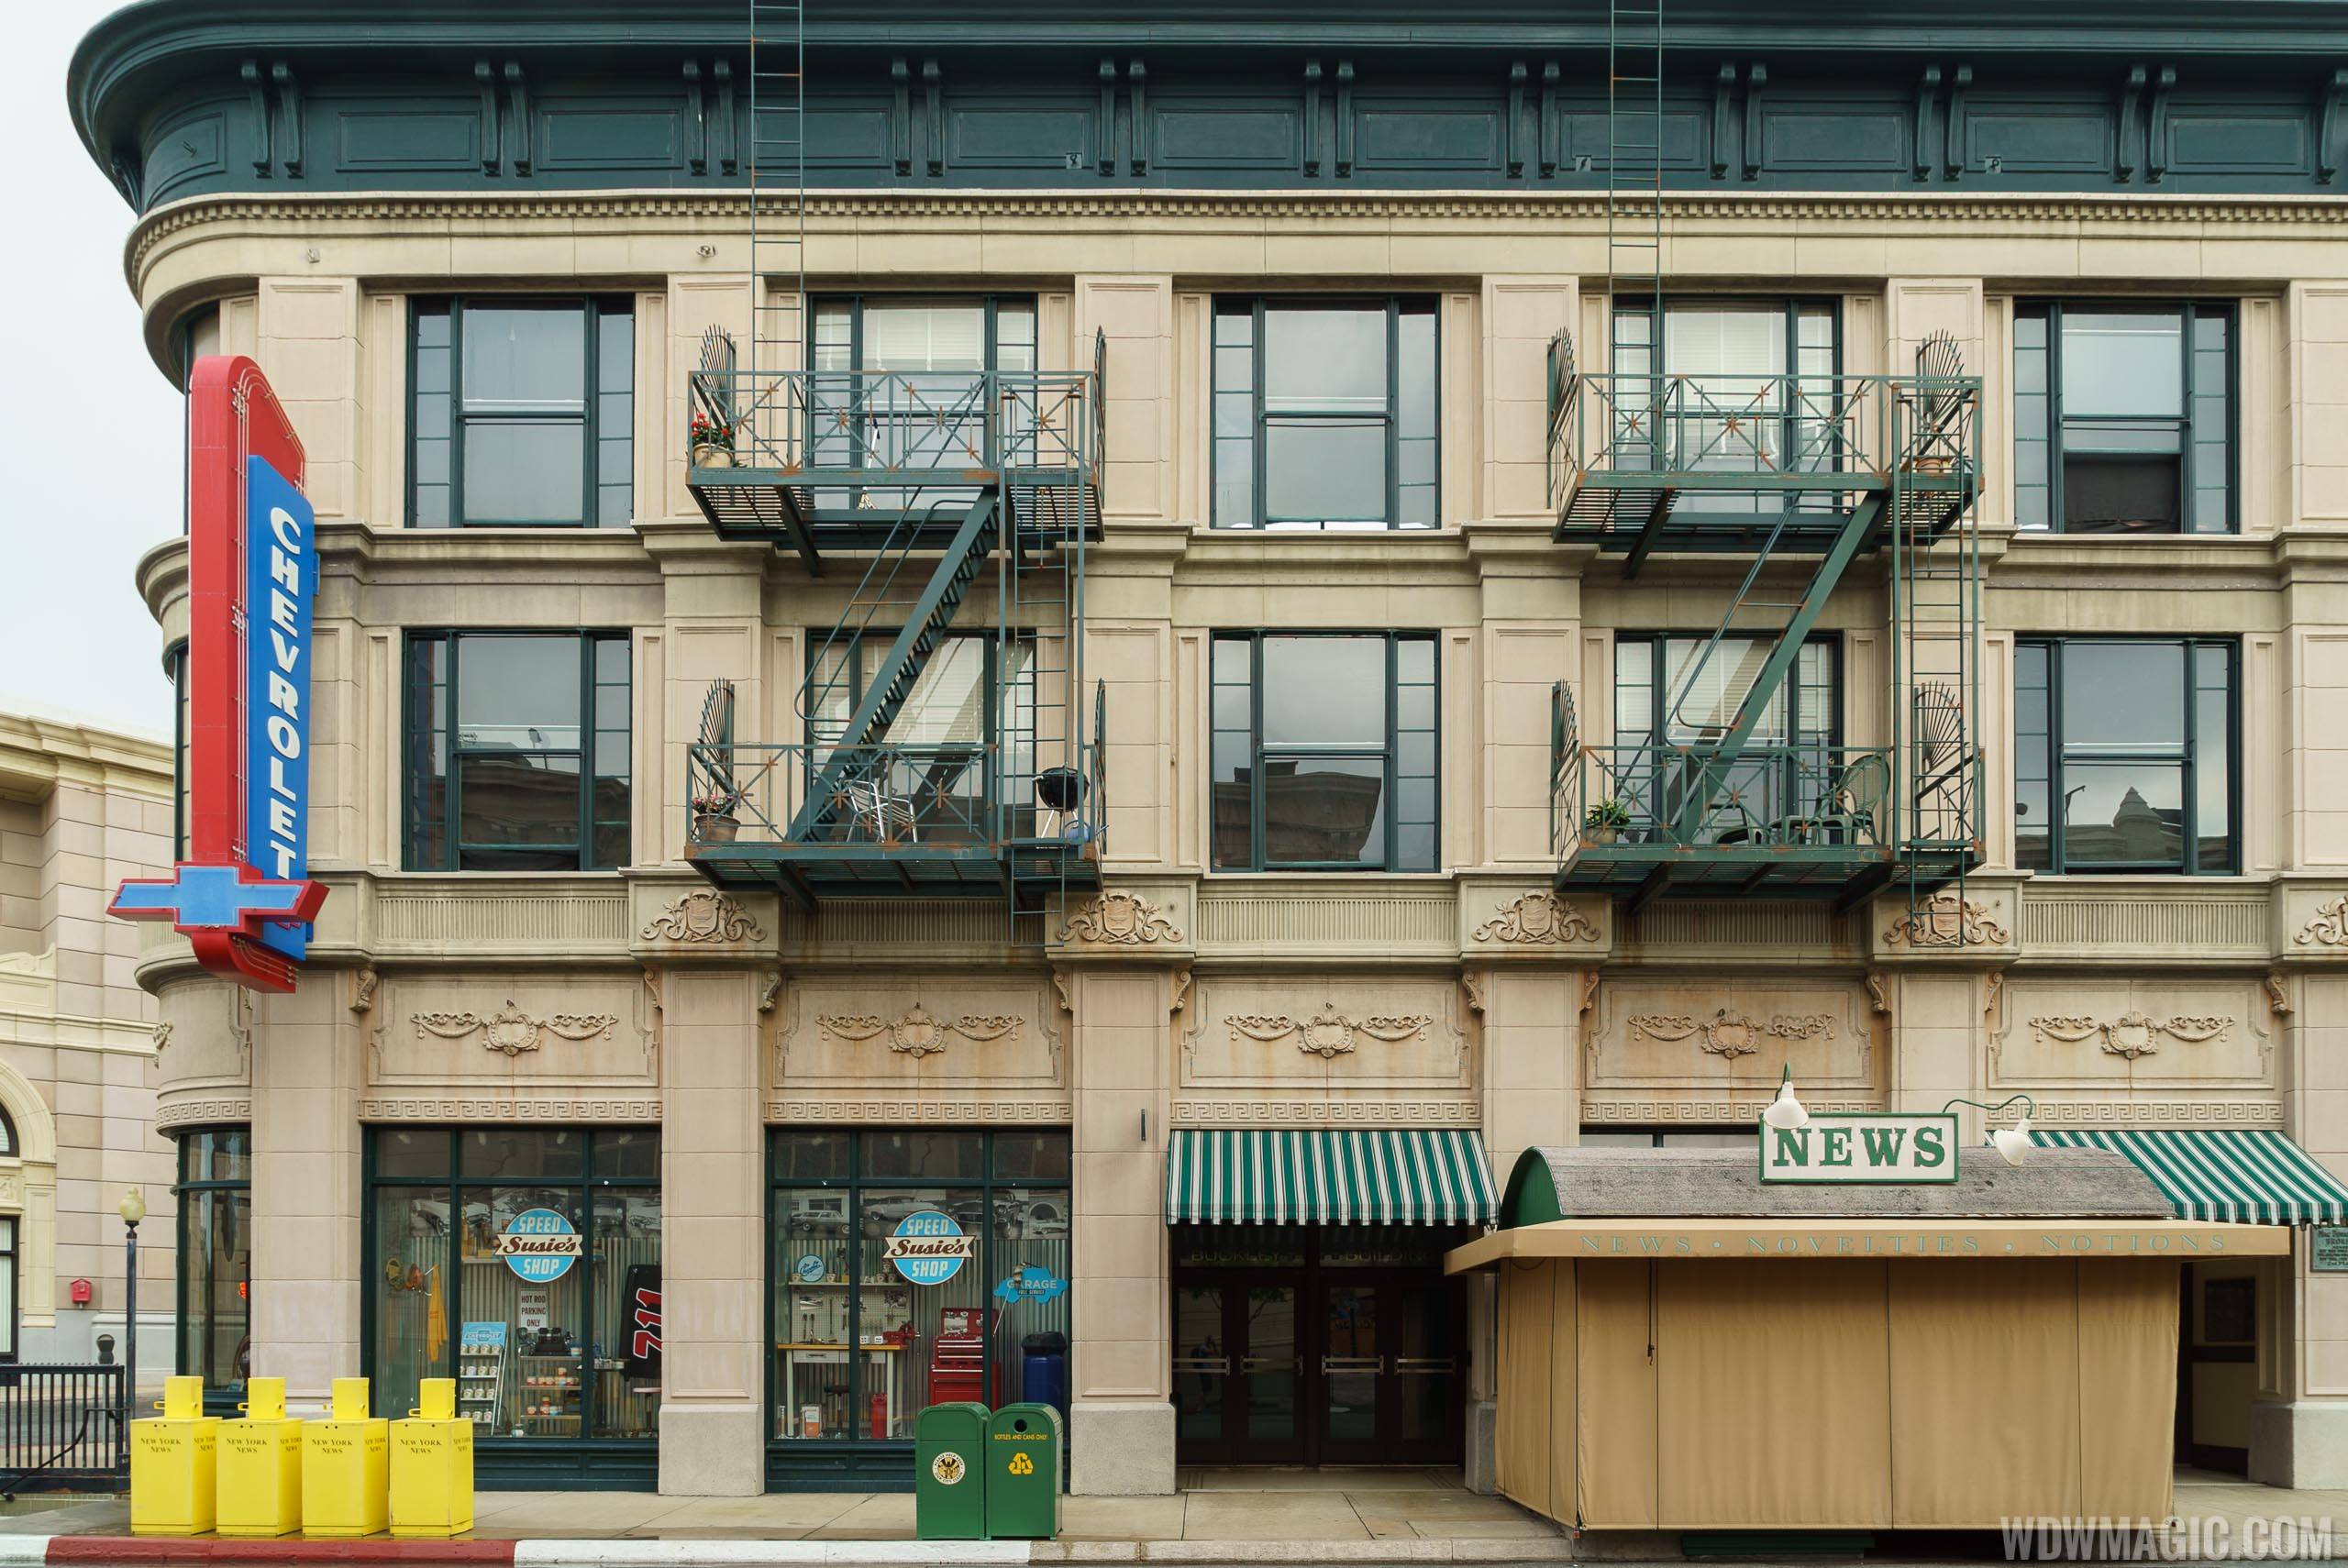 Streets of America facades - New York Speed Suzie's Shop